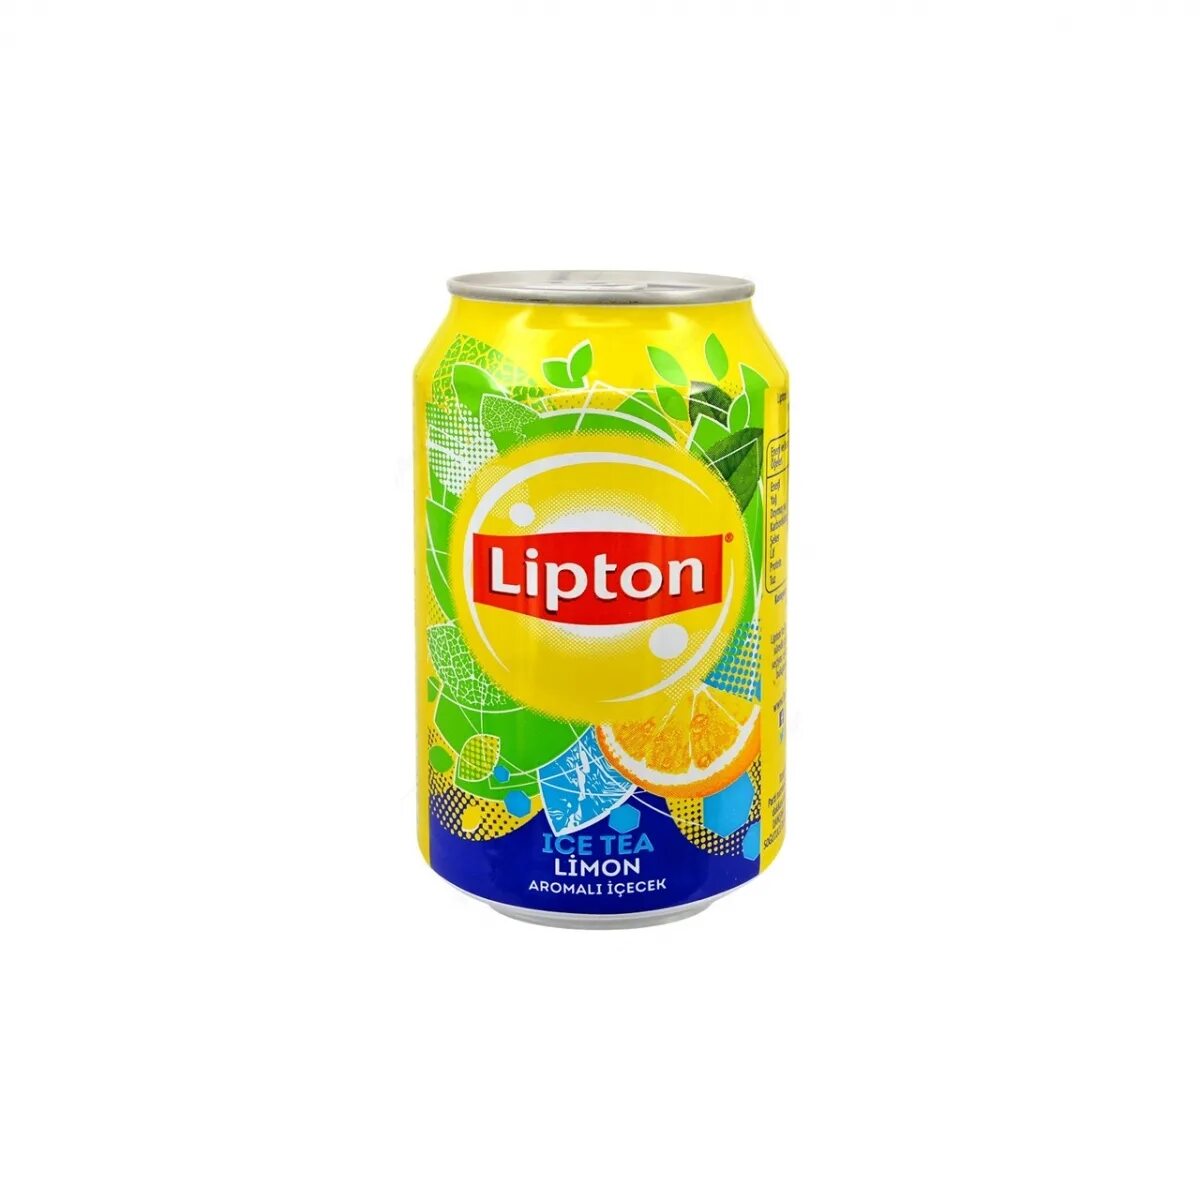 Липтон айс Теа. Lipton Ice Tea 330ml Limon x24. Lipton Mango 330 ml. Lipton Ice Tea чай.